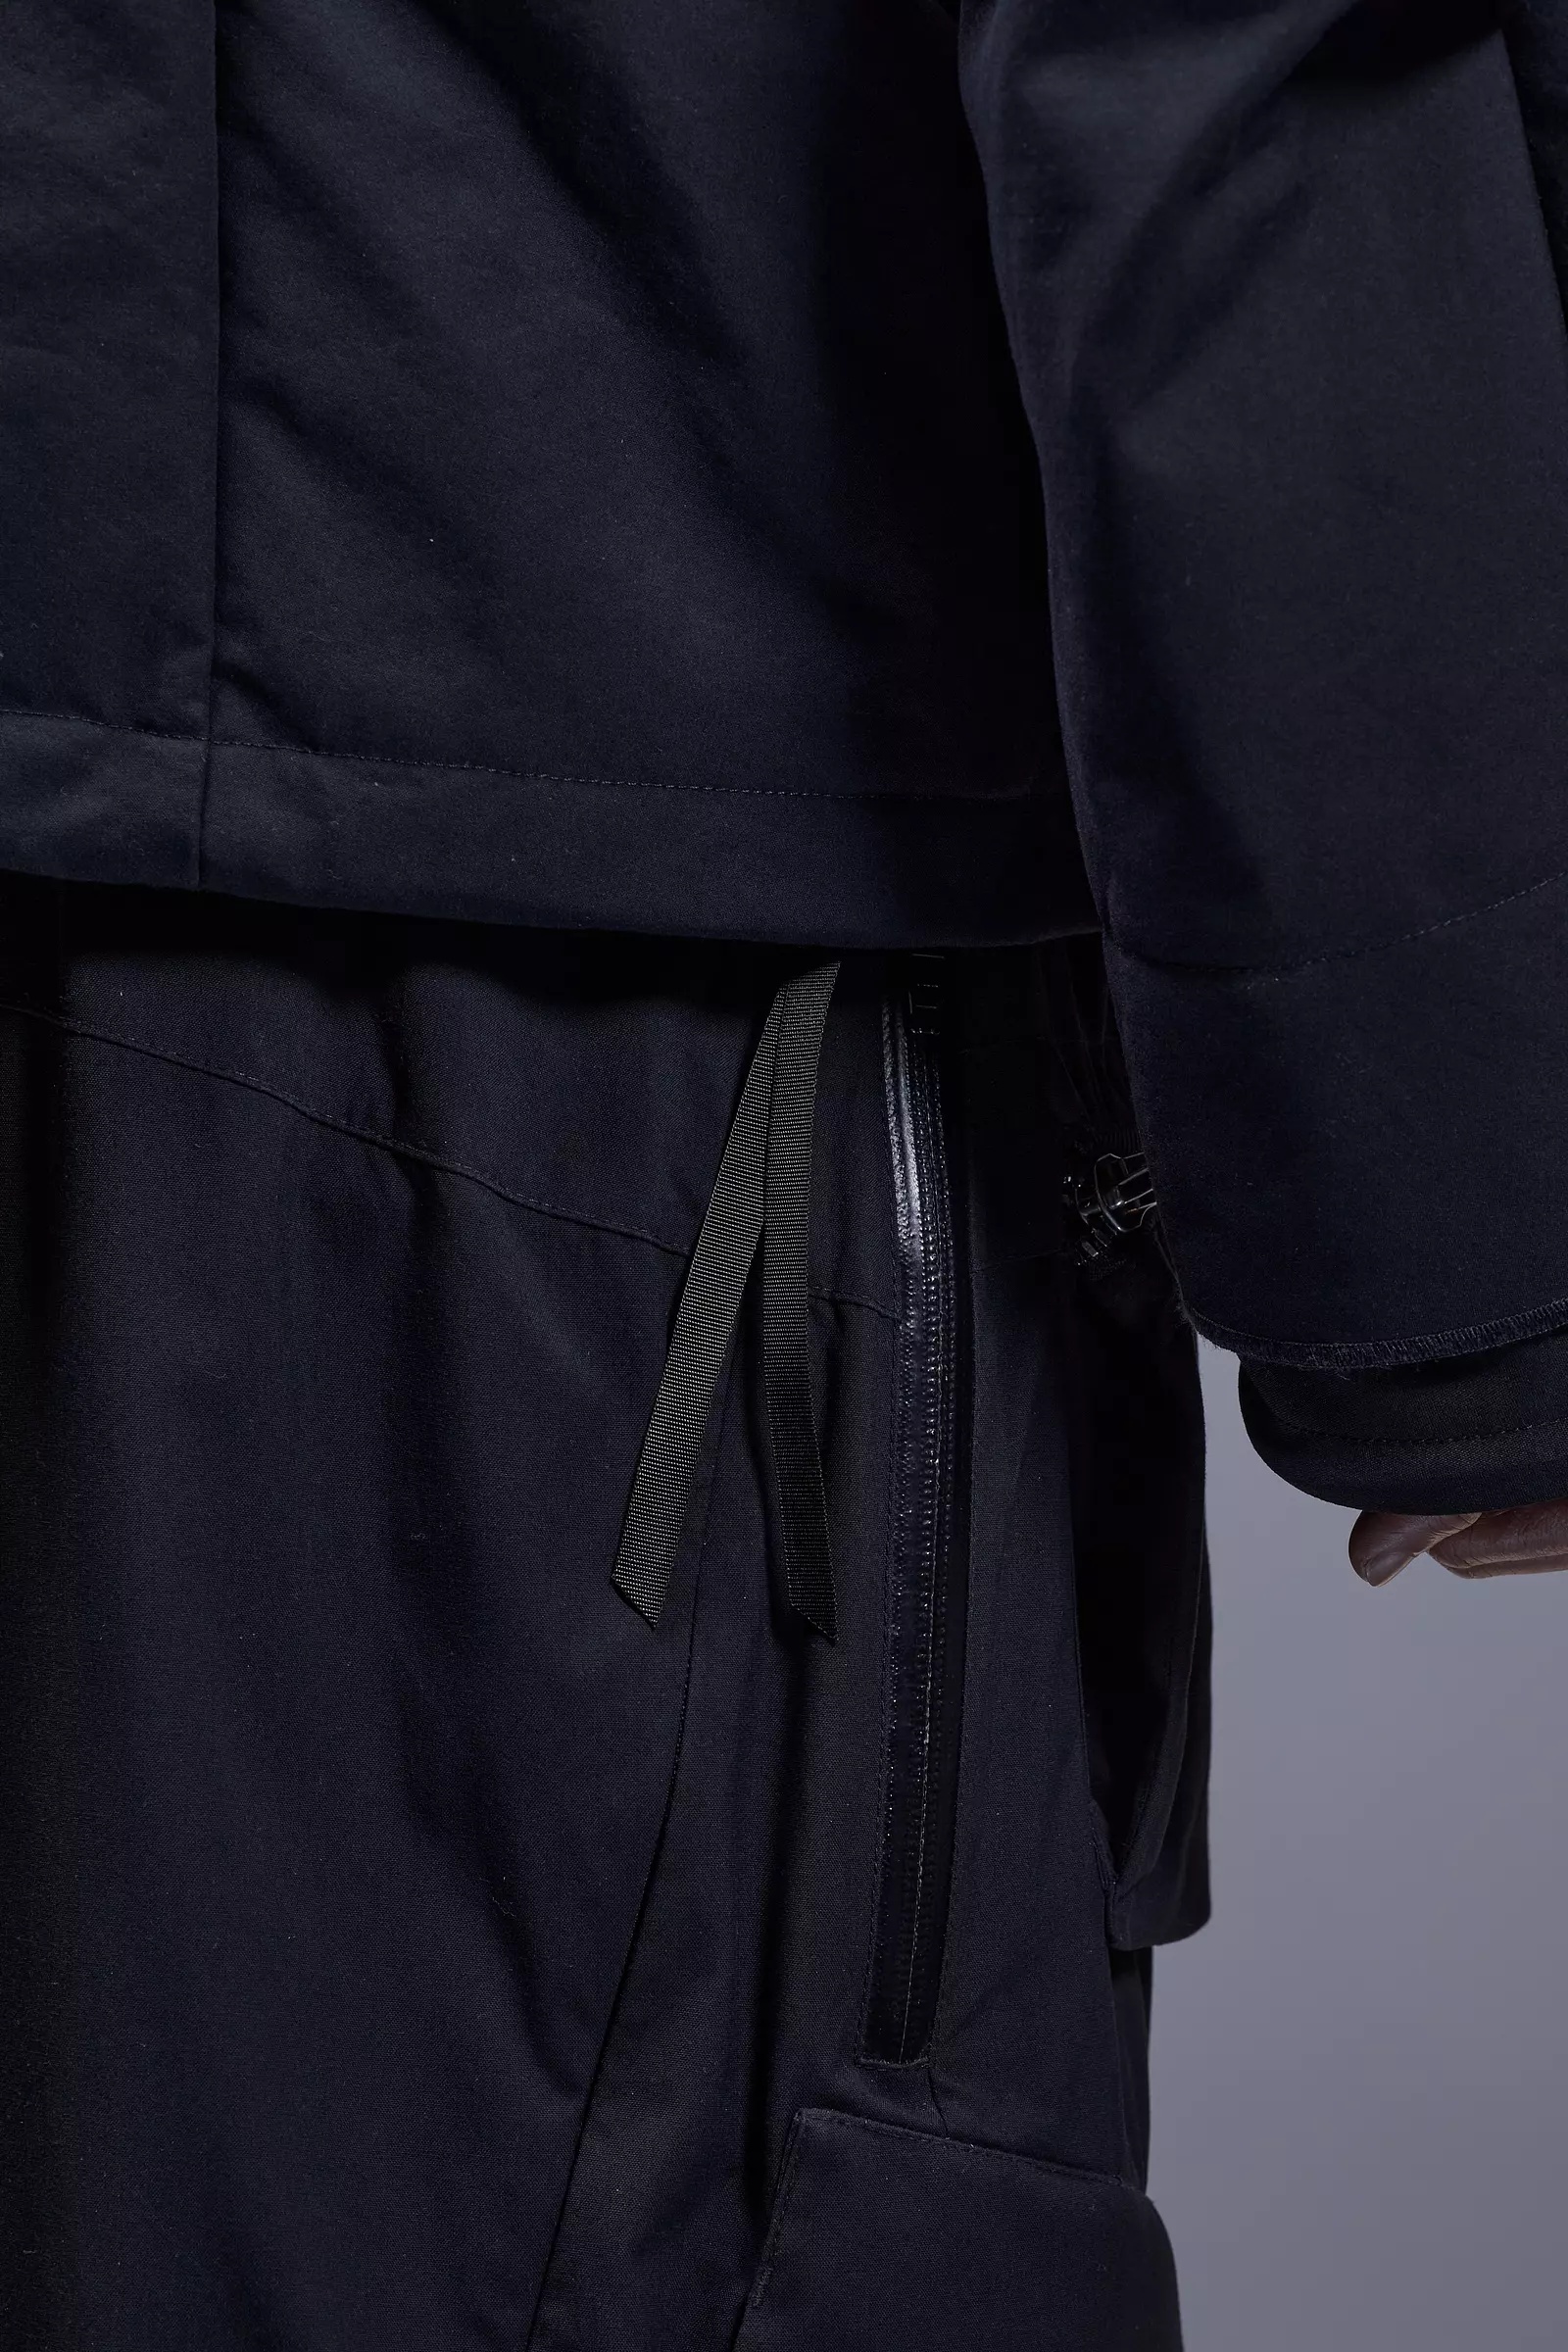 J113-SD Stotz® EtaProof™ Double Layer Weave Jacket Black - 38